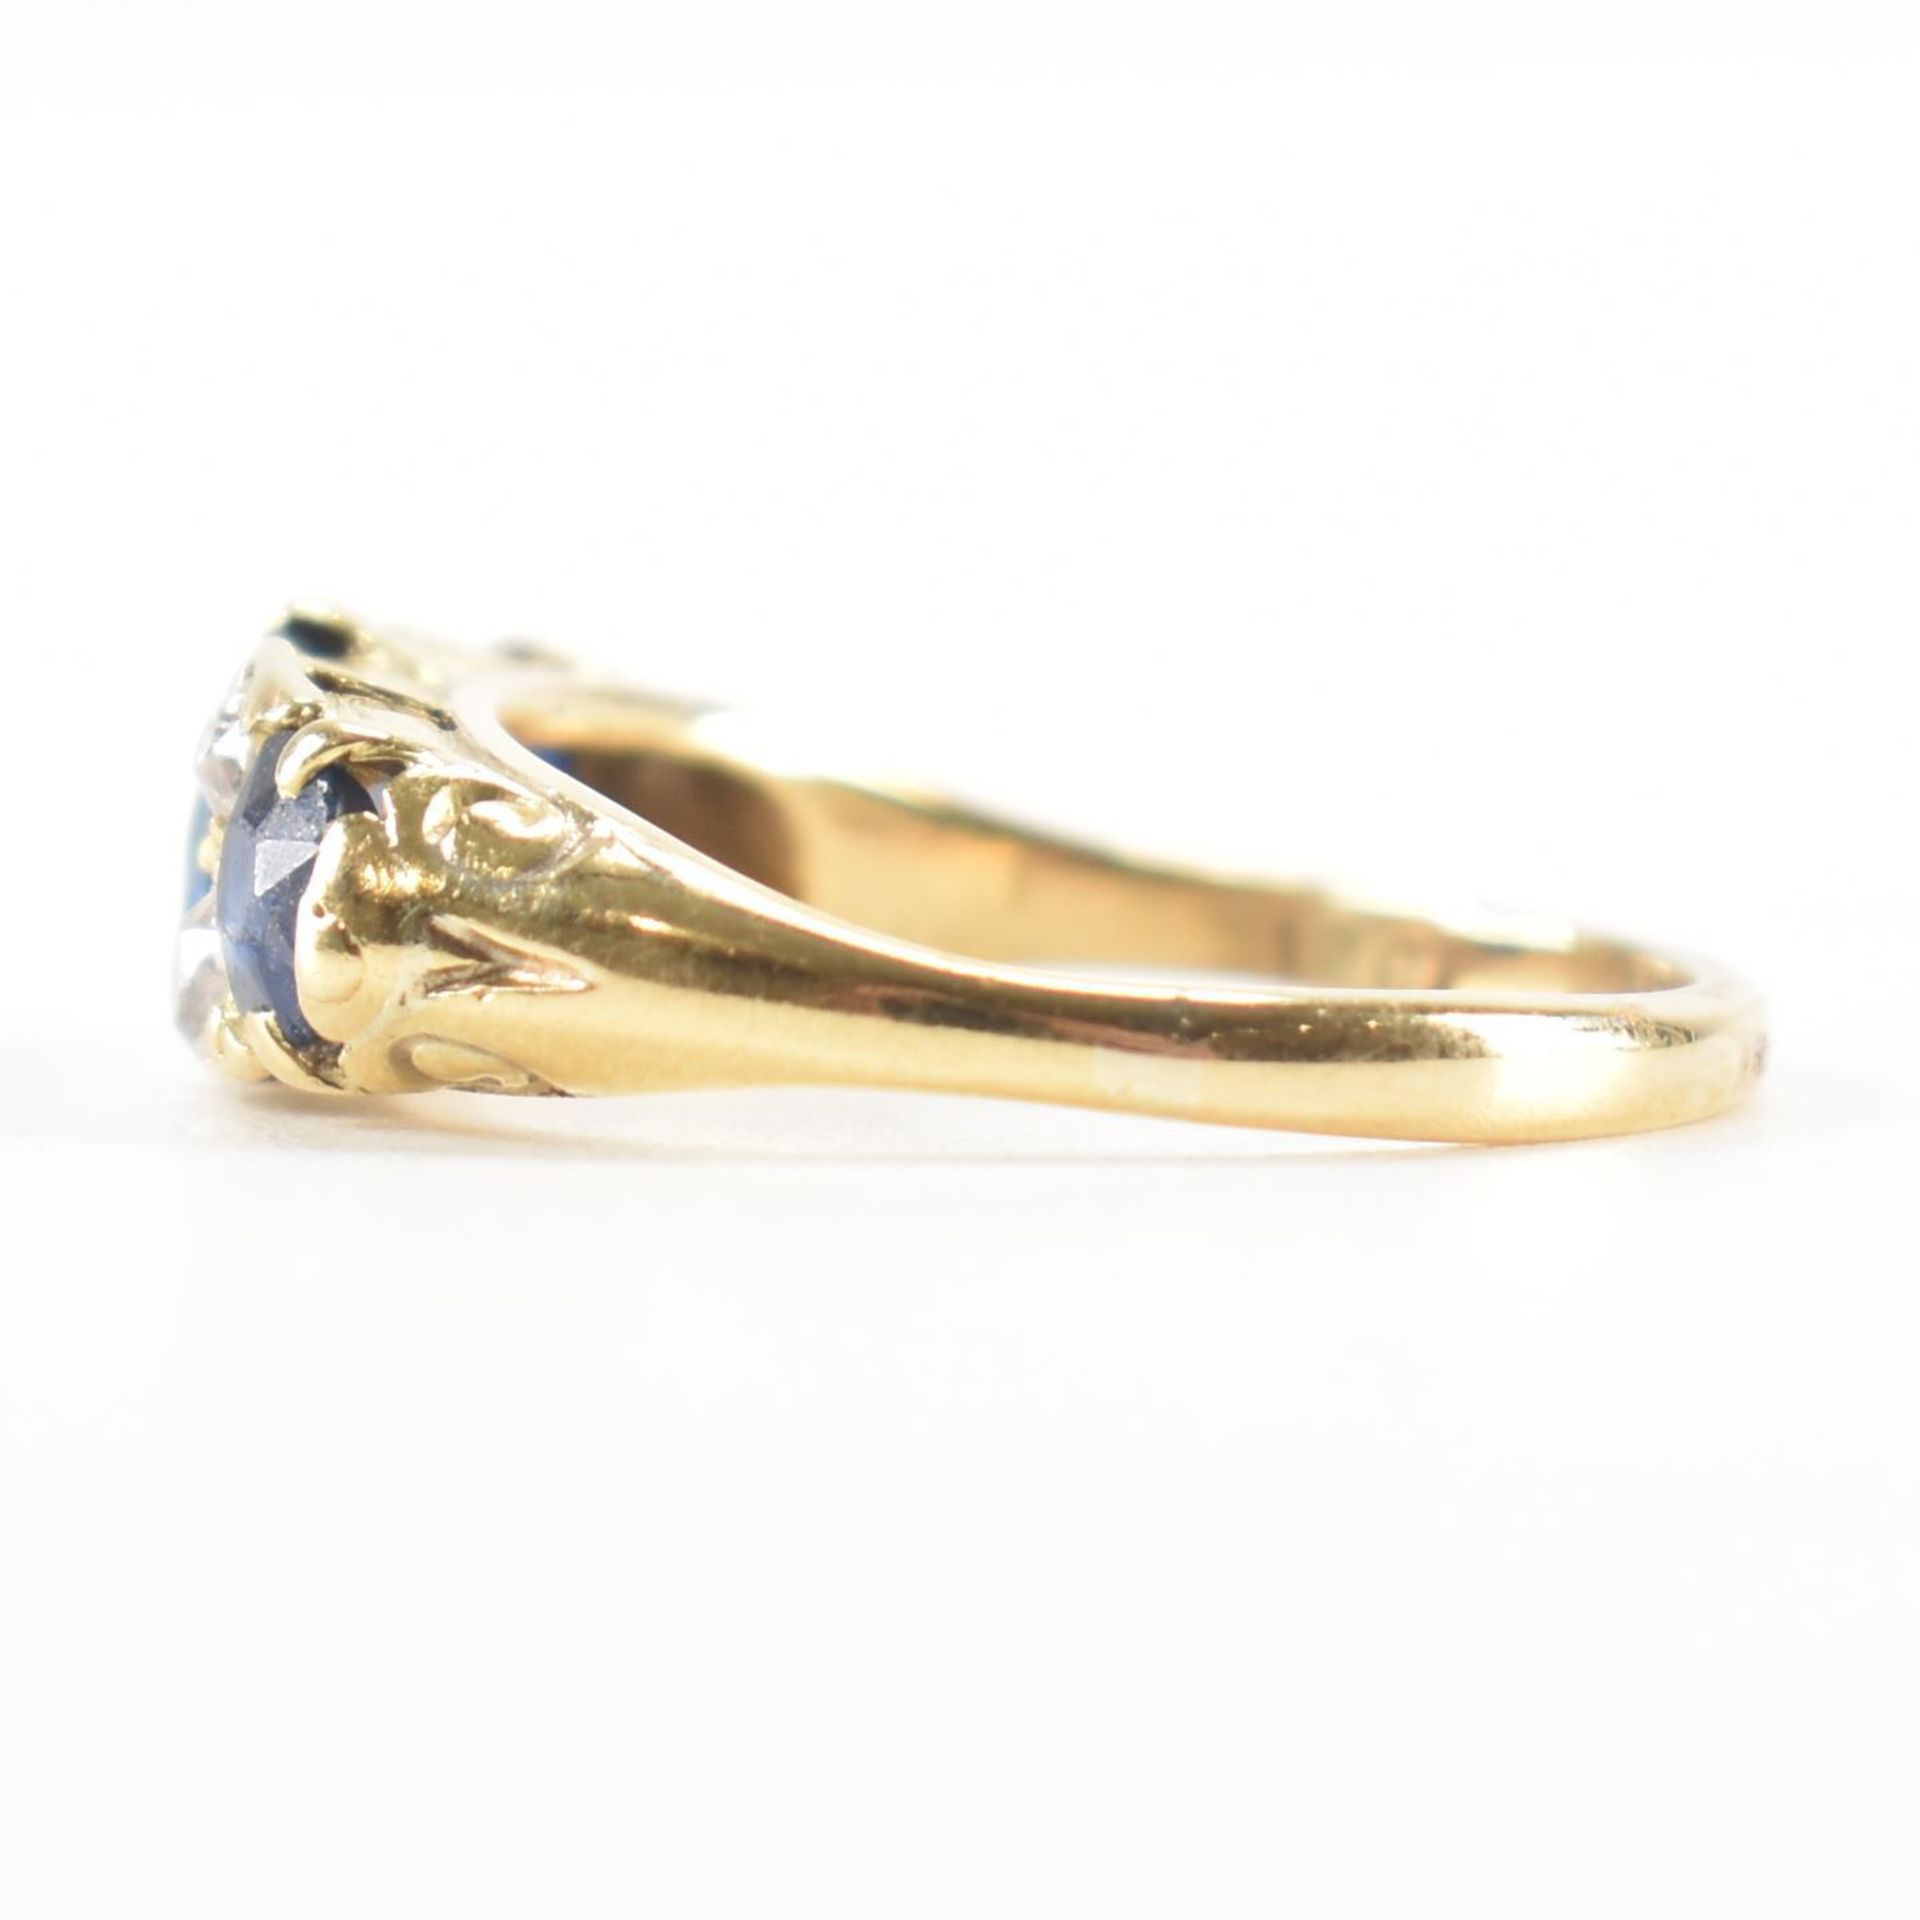 EDWARDIAN GOLD SAPPHIRE & DIAMOND RING - Image 2 of 9